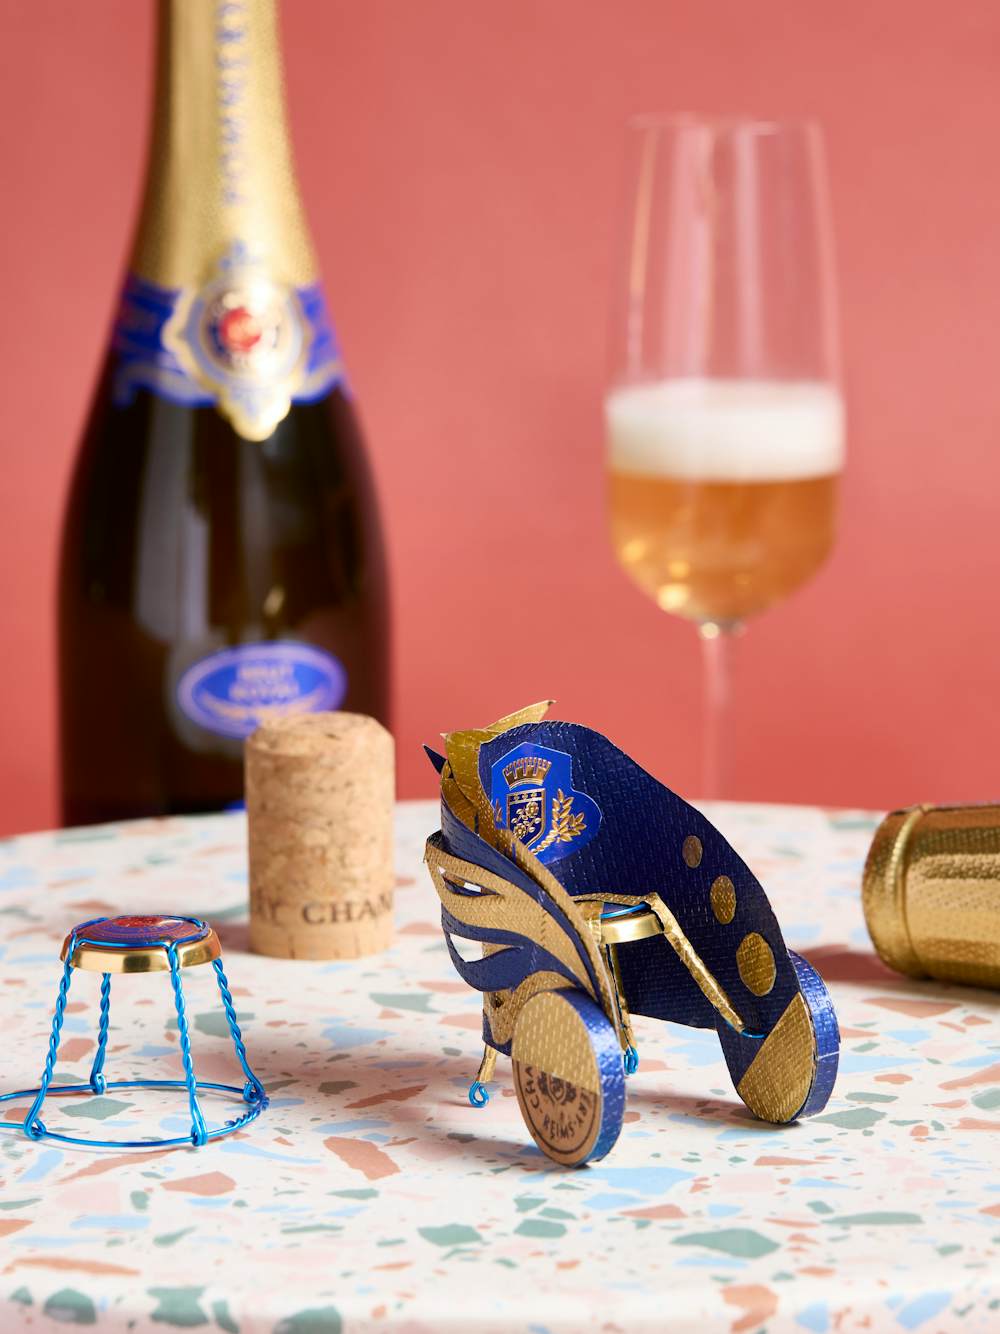 Most Original – Runner-Up 2022 Champagne Chair Winner